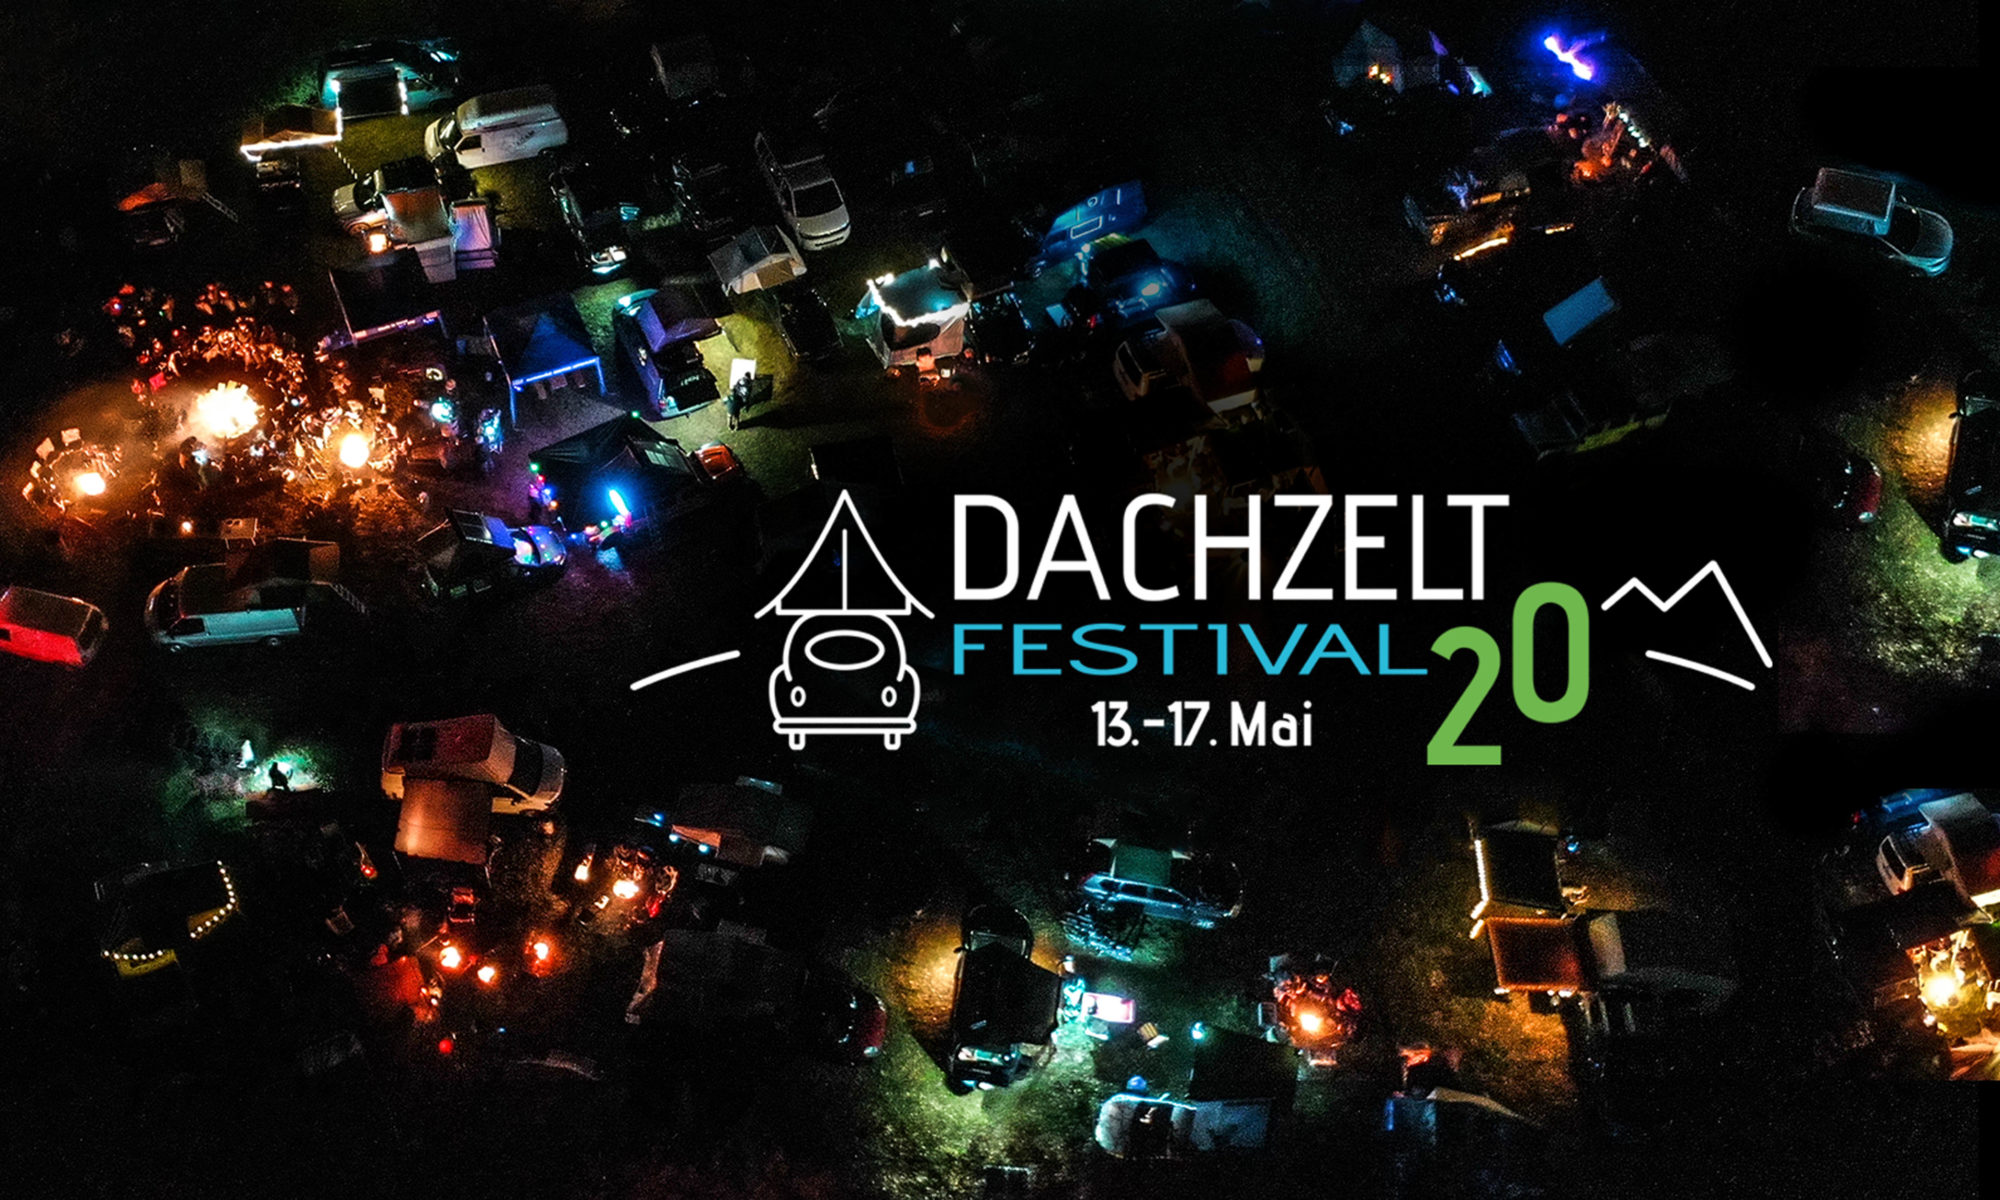 DACHZELT FESTIVAL 20 DZF20 13 17 Mai 2020 teaser 3 16 9 1 2000x1200